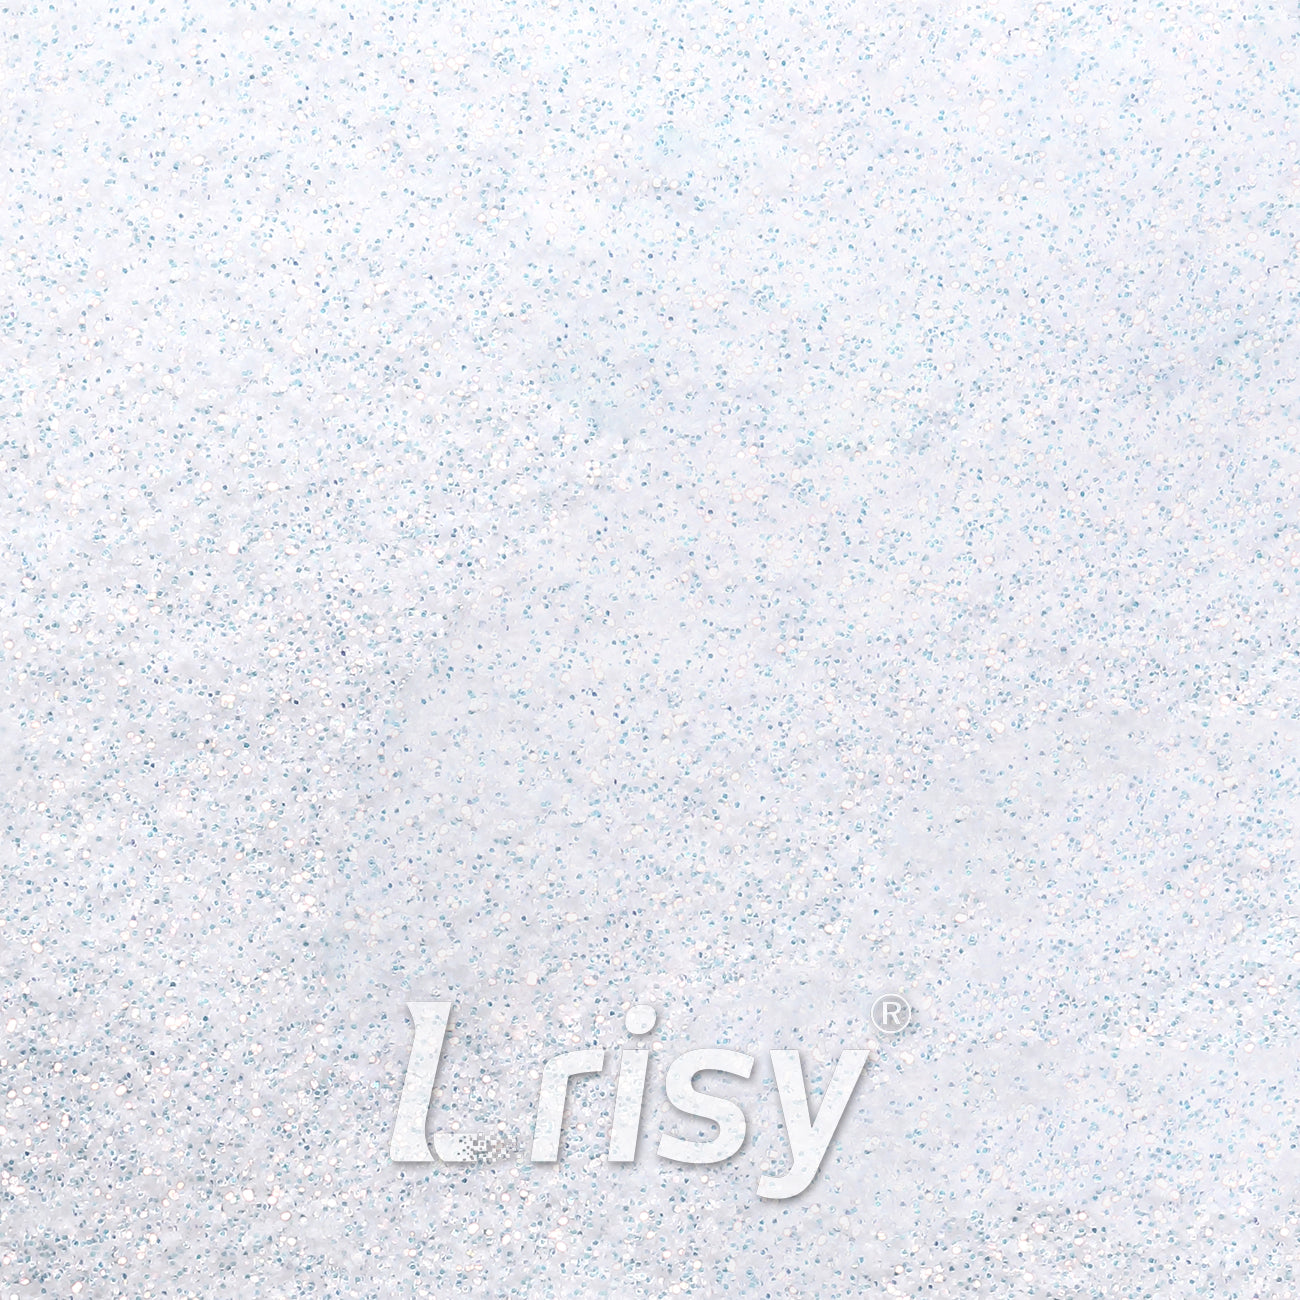 Lrisy Iridescent Extra Fine Glitter Powder with Shaker Lid 140g/4.5oz (Ultra Thin Iridescent Dream Blue/FC321)